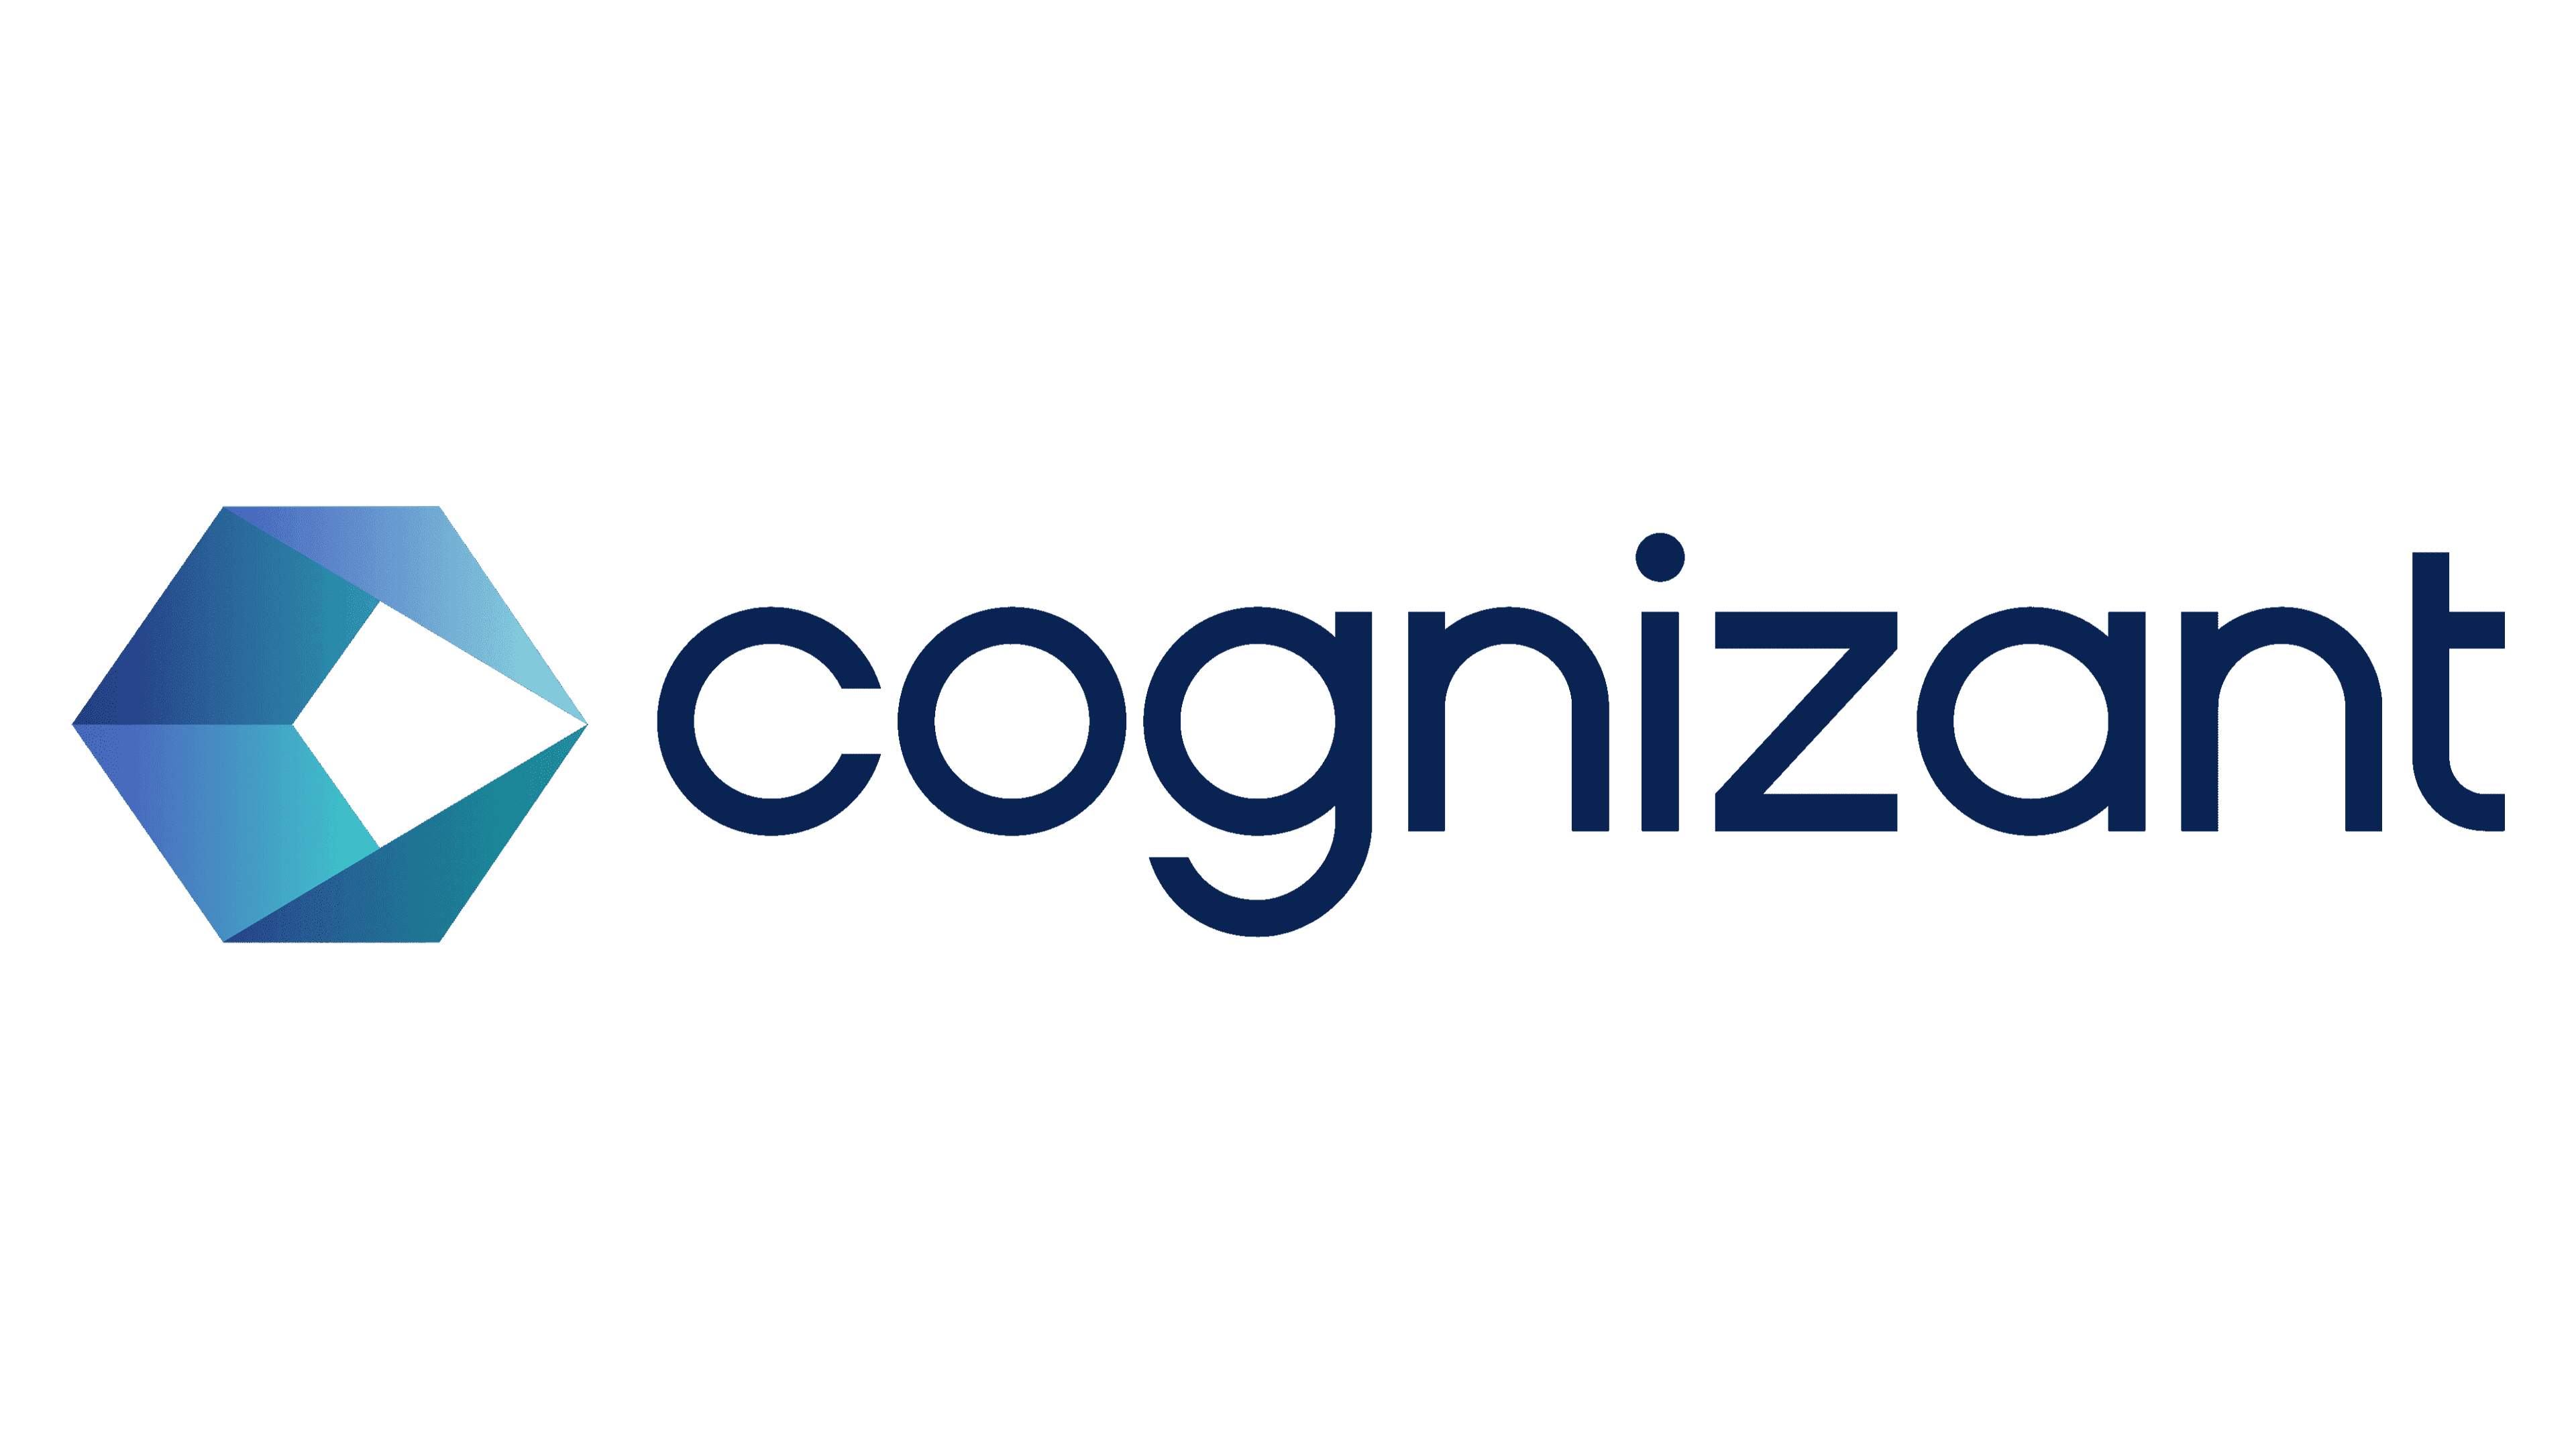 Cognizant-Logo